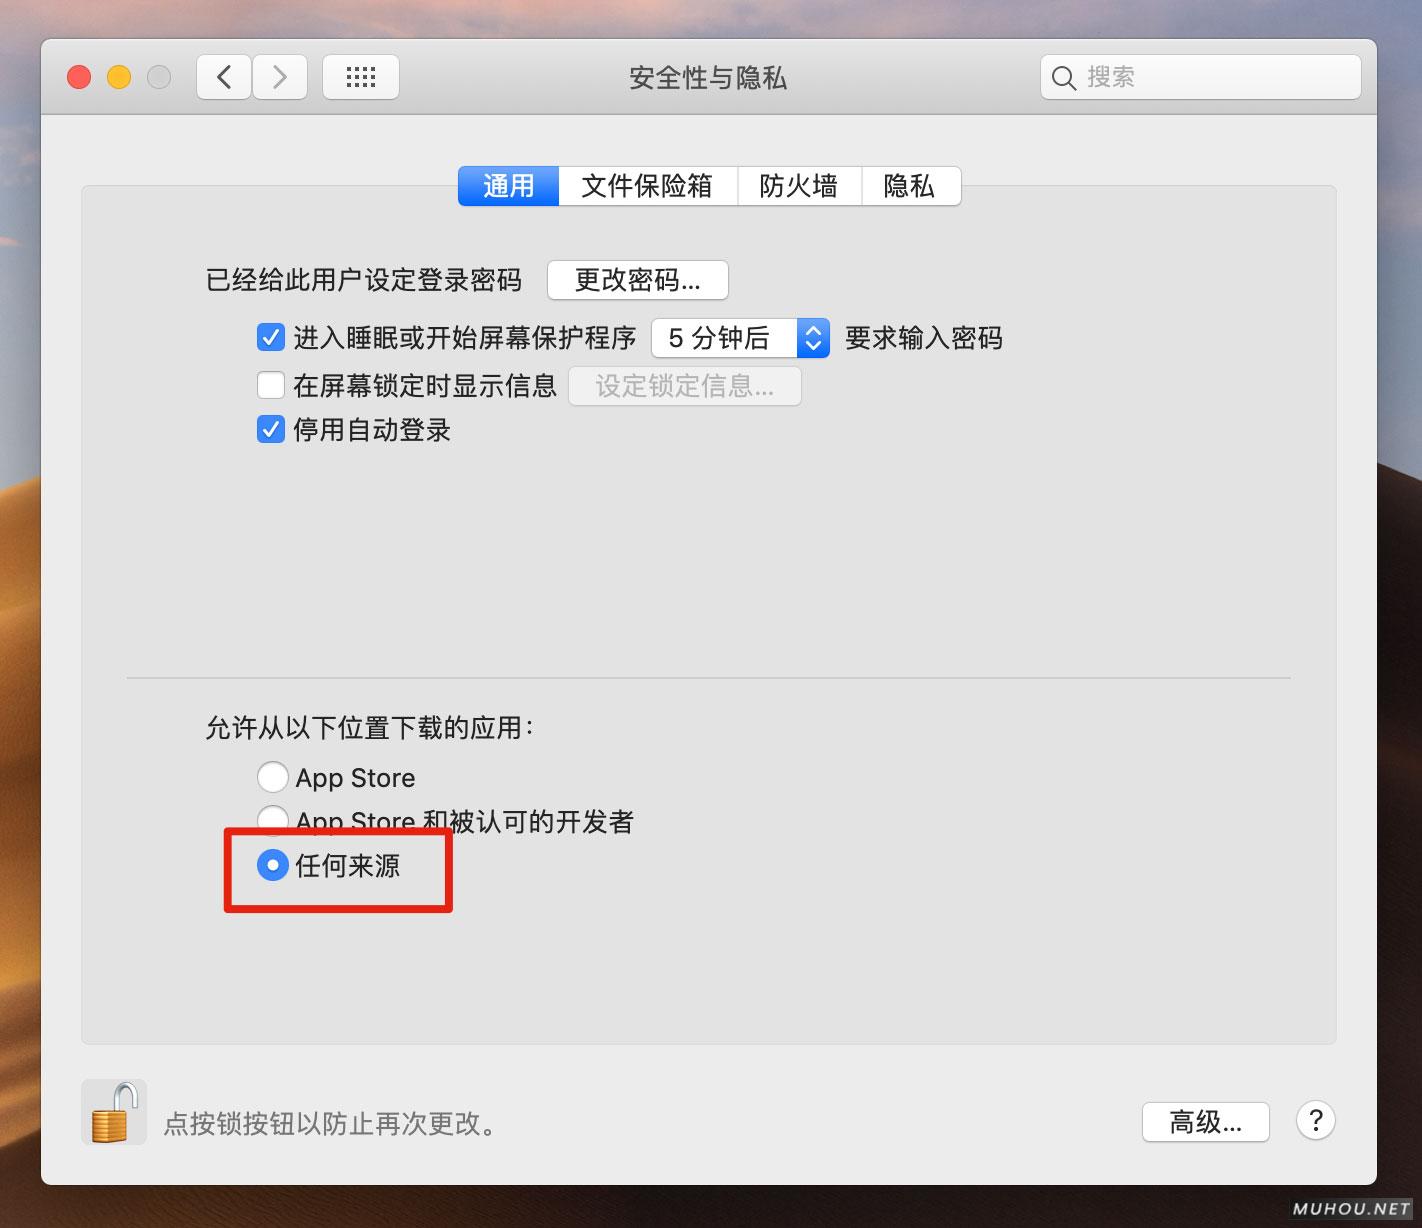 BR2021|Adobe Bridge 2021 v11.0 ARC13.1 简体中文破解版下载 (MAC图片视频浏览器) 支持Silicon M1插图1